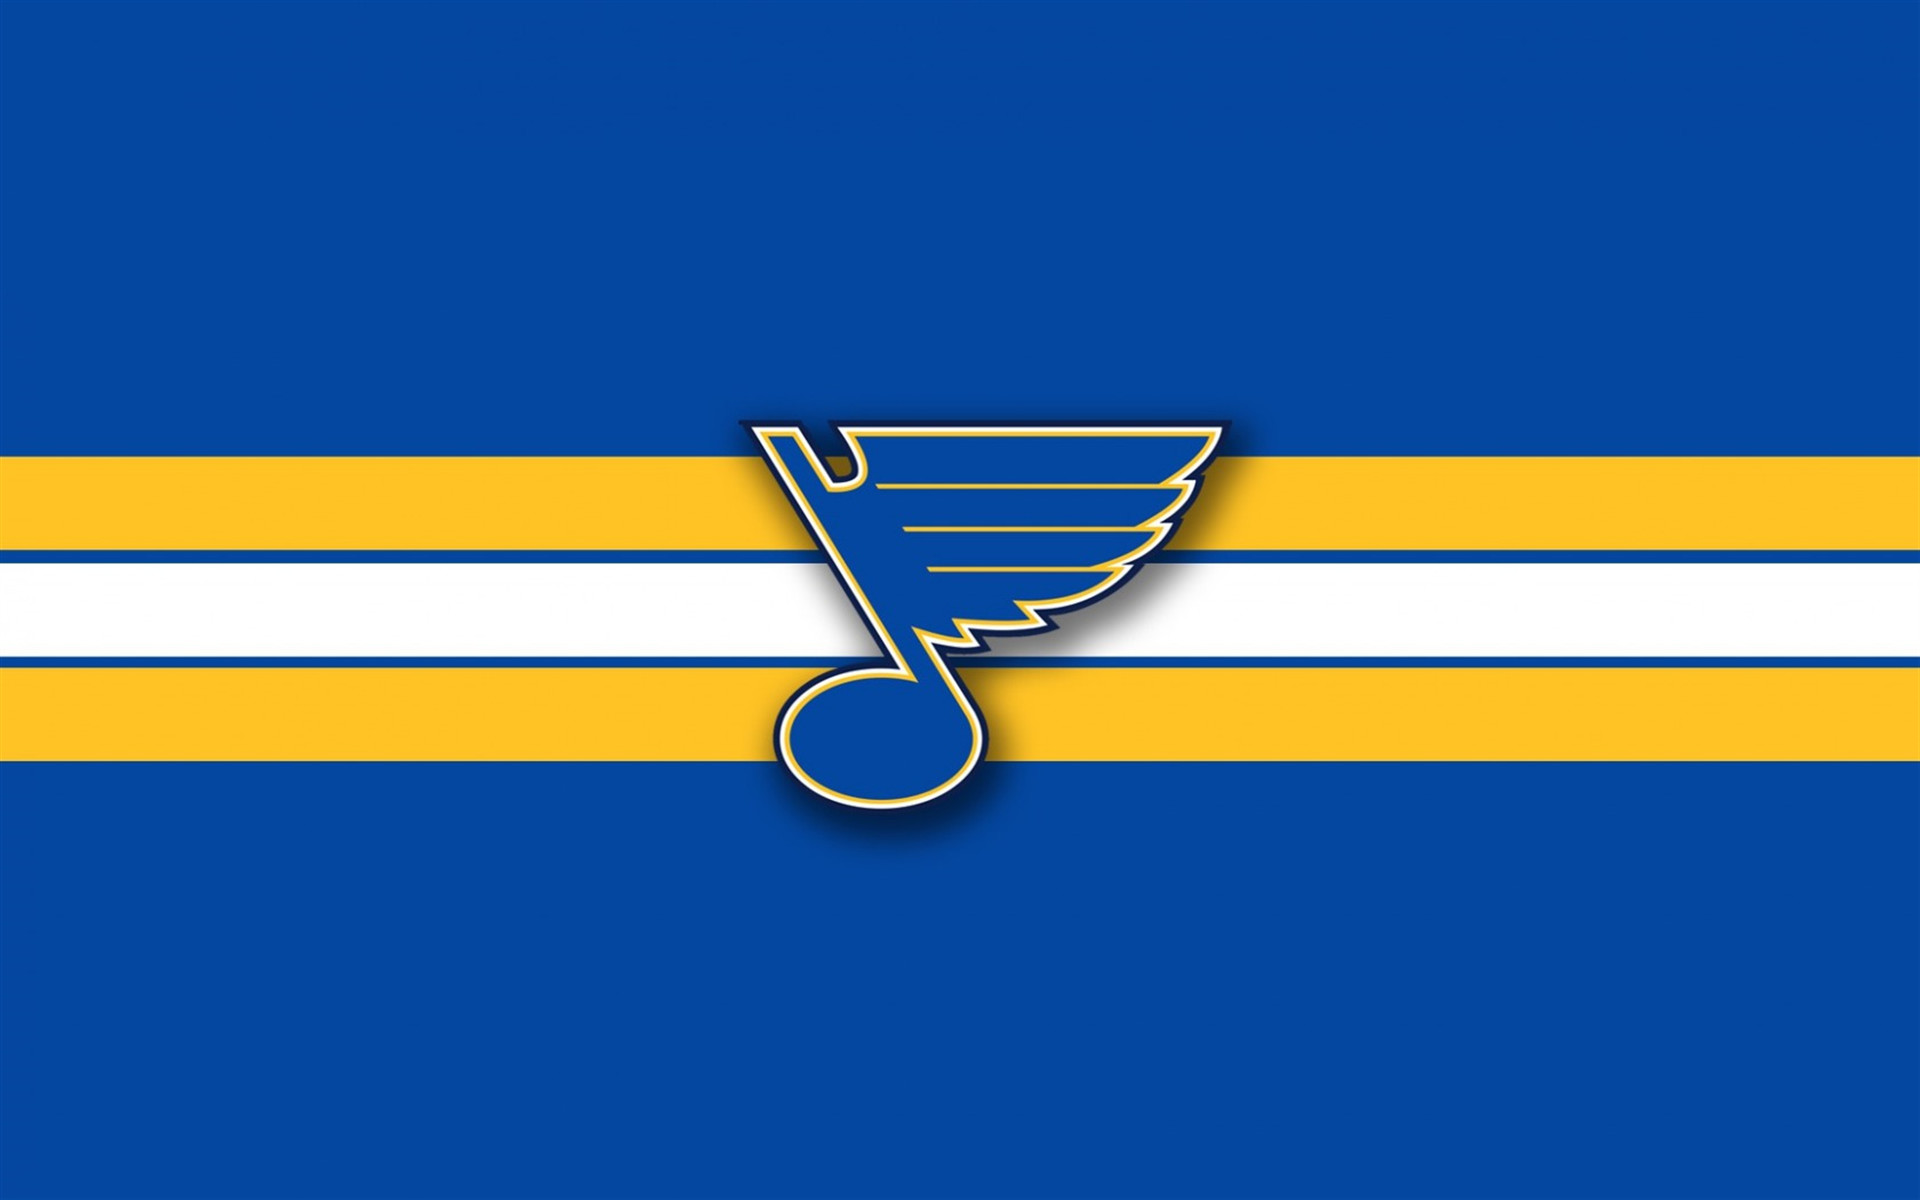 1920x1200 St Louis Blues, logo, emblem, blue yellow background, NHL, American hockey